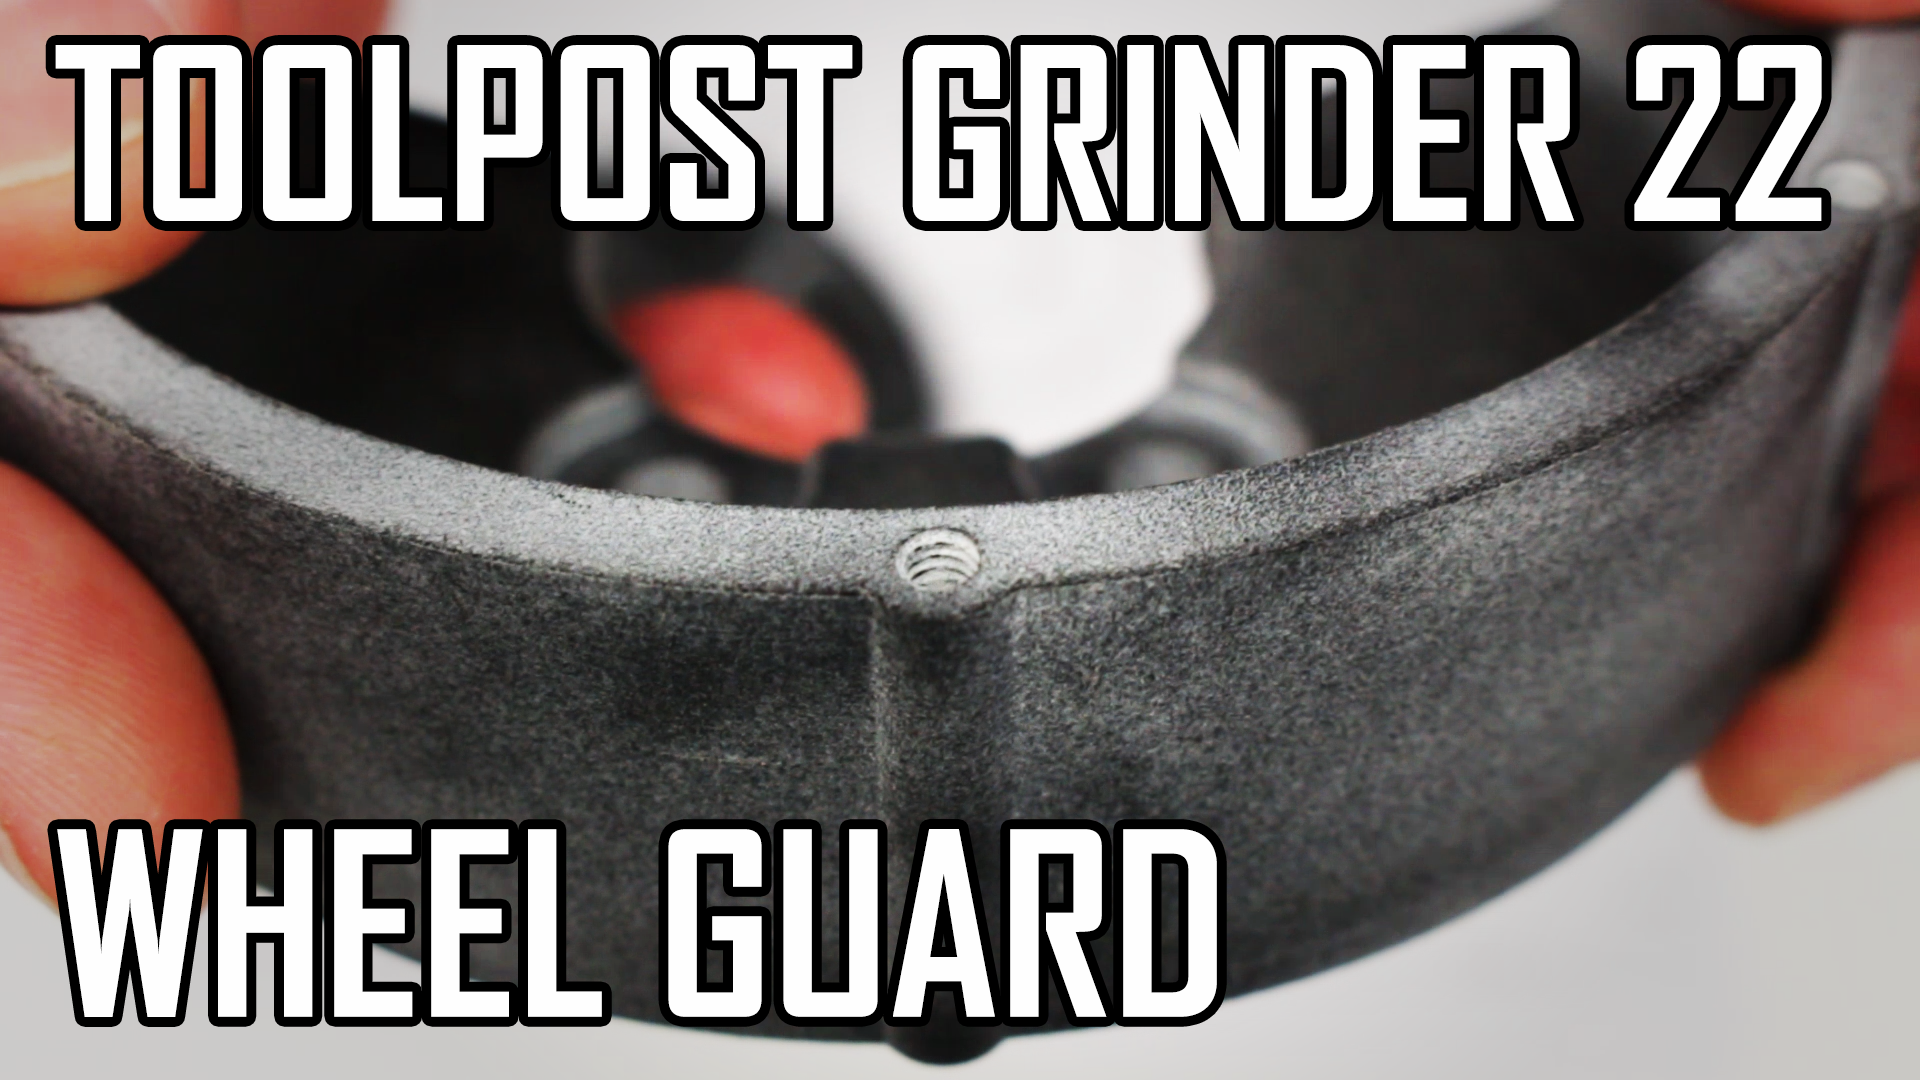 Toolpost Grinder Part 22: Wheel Guard